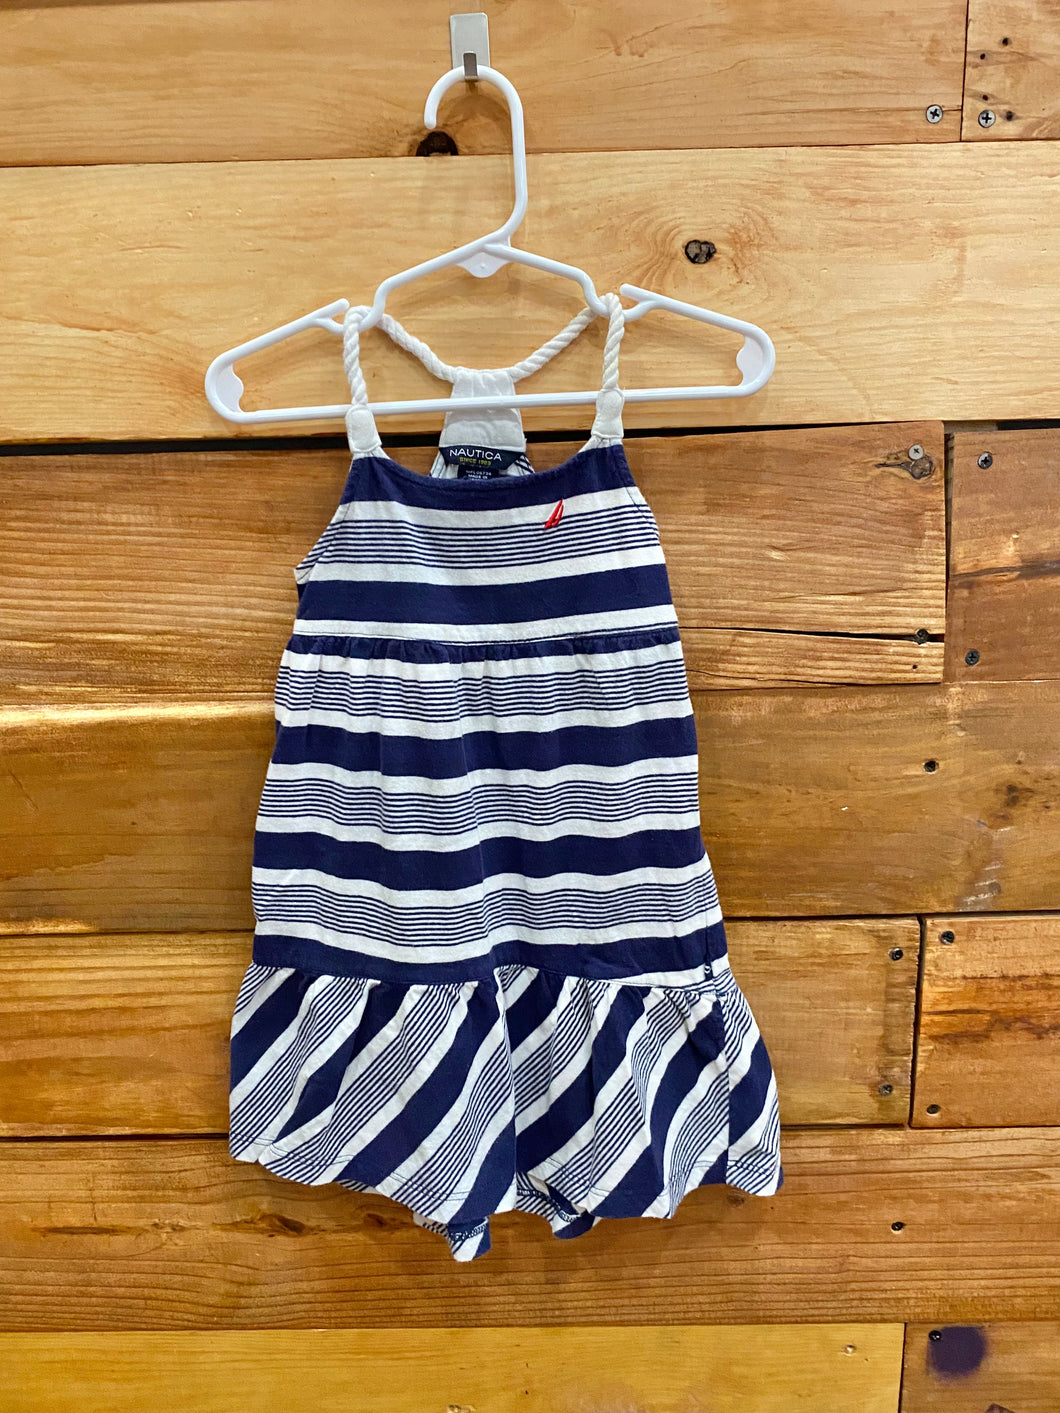 Nautica Blue Striped Dress Size 2T